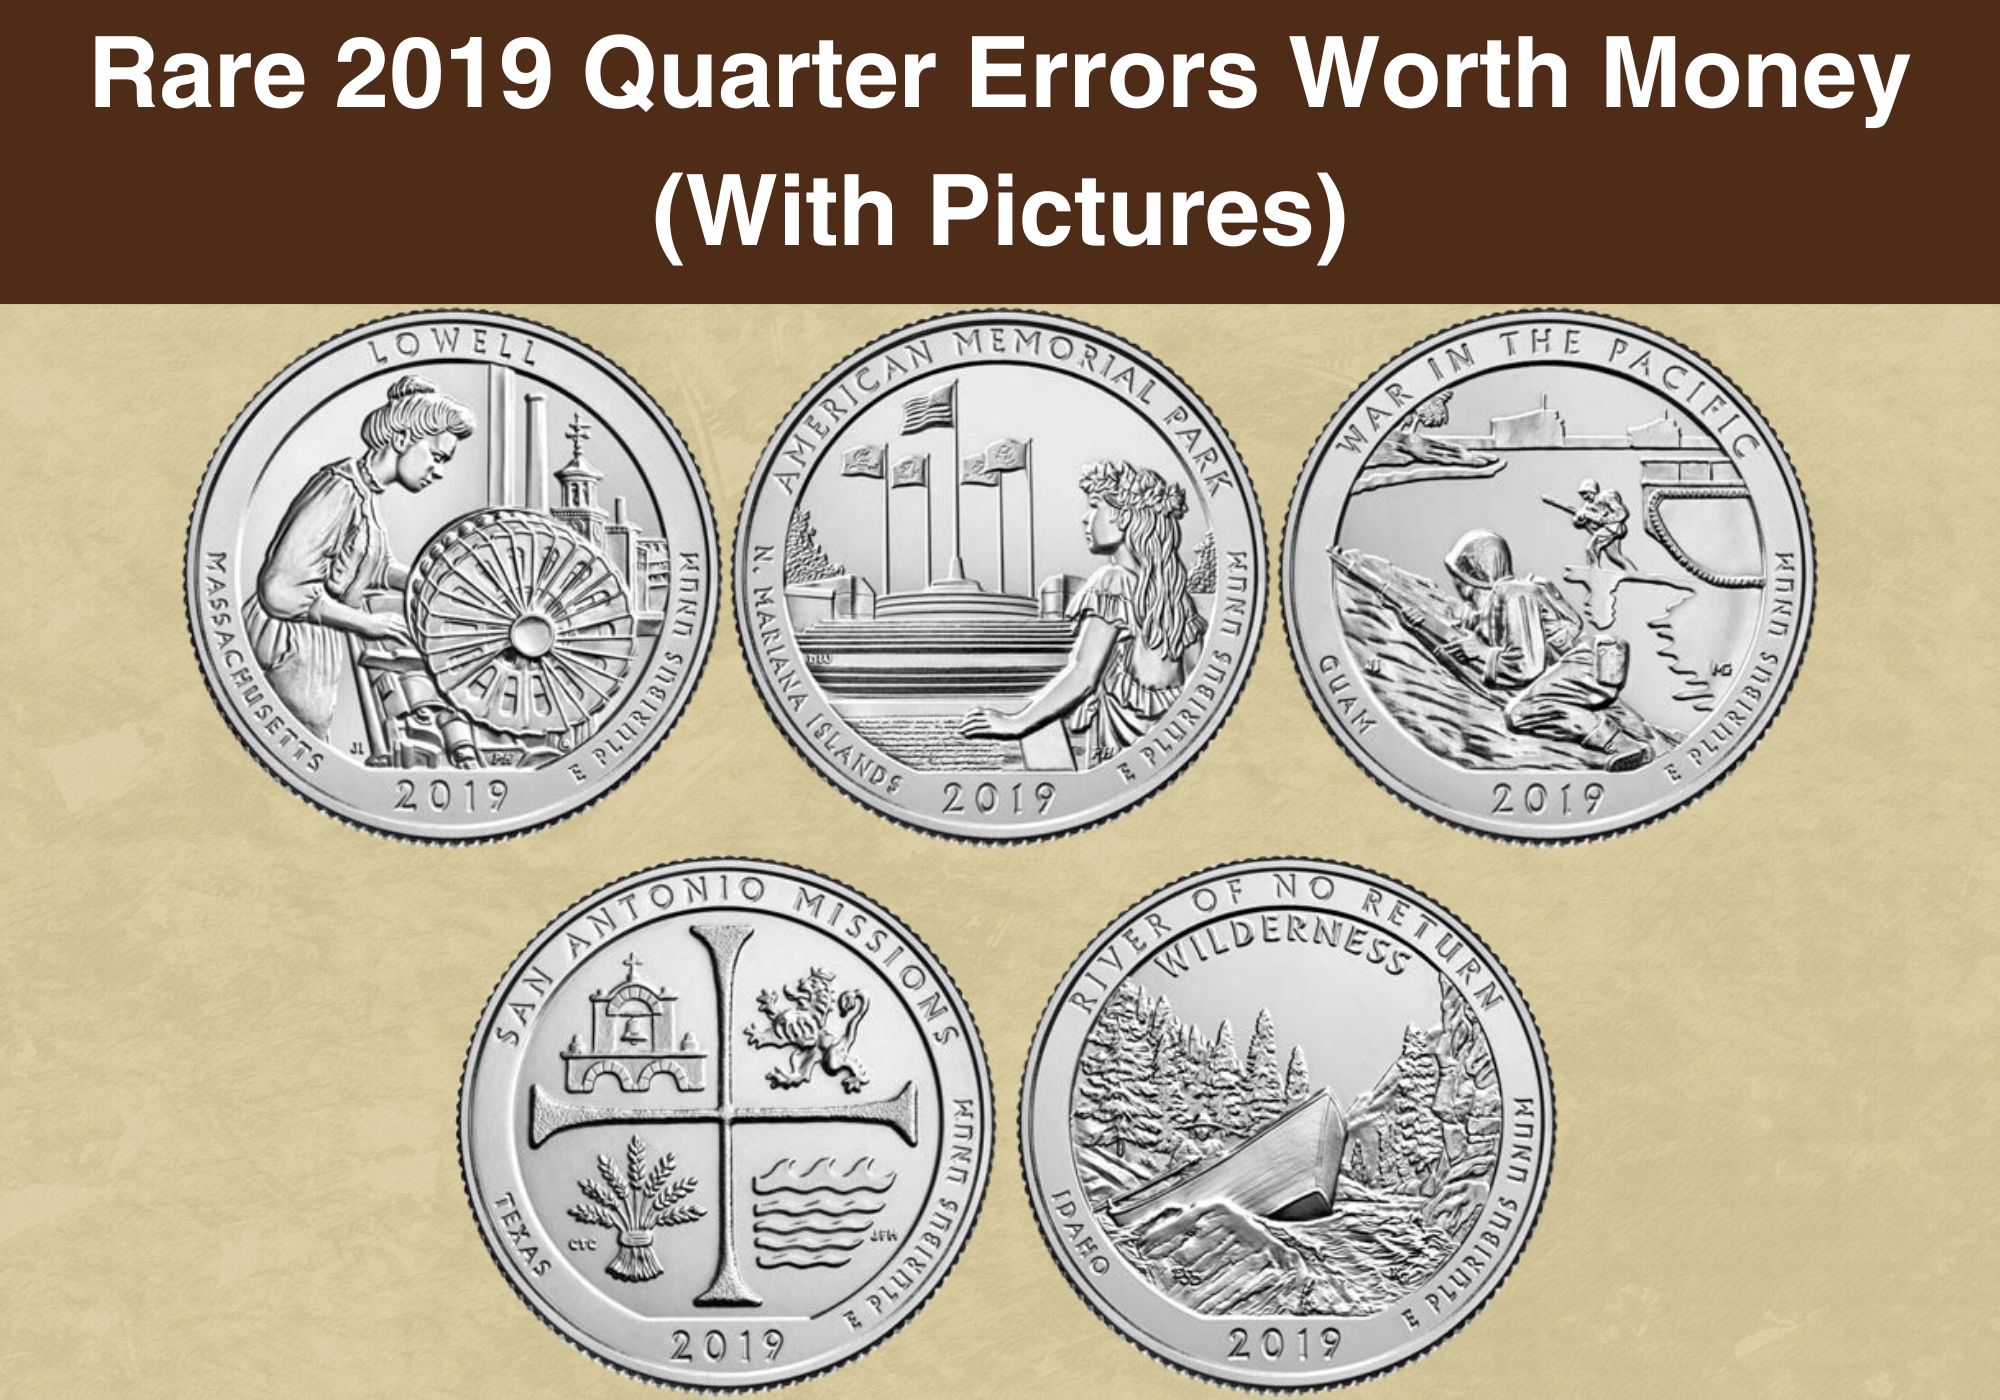 Rare 2019 Quarter Errors Worth Money (With Pictures)